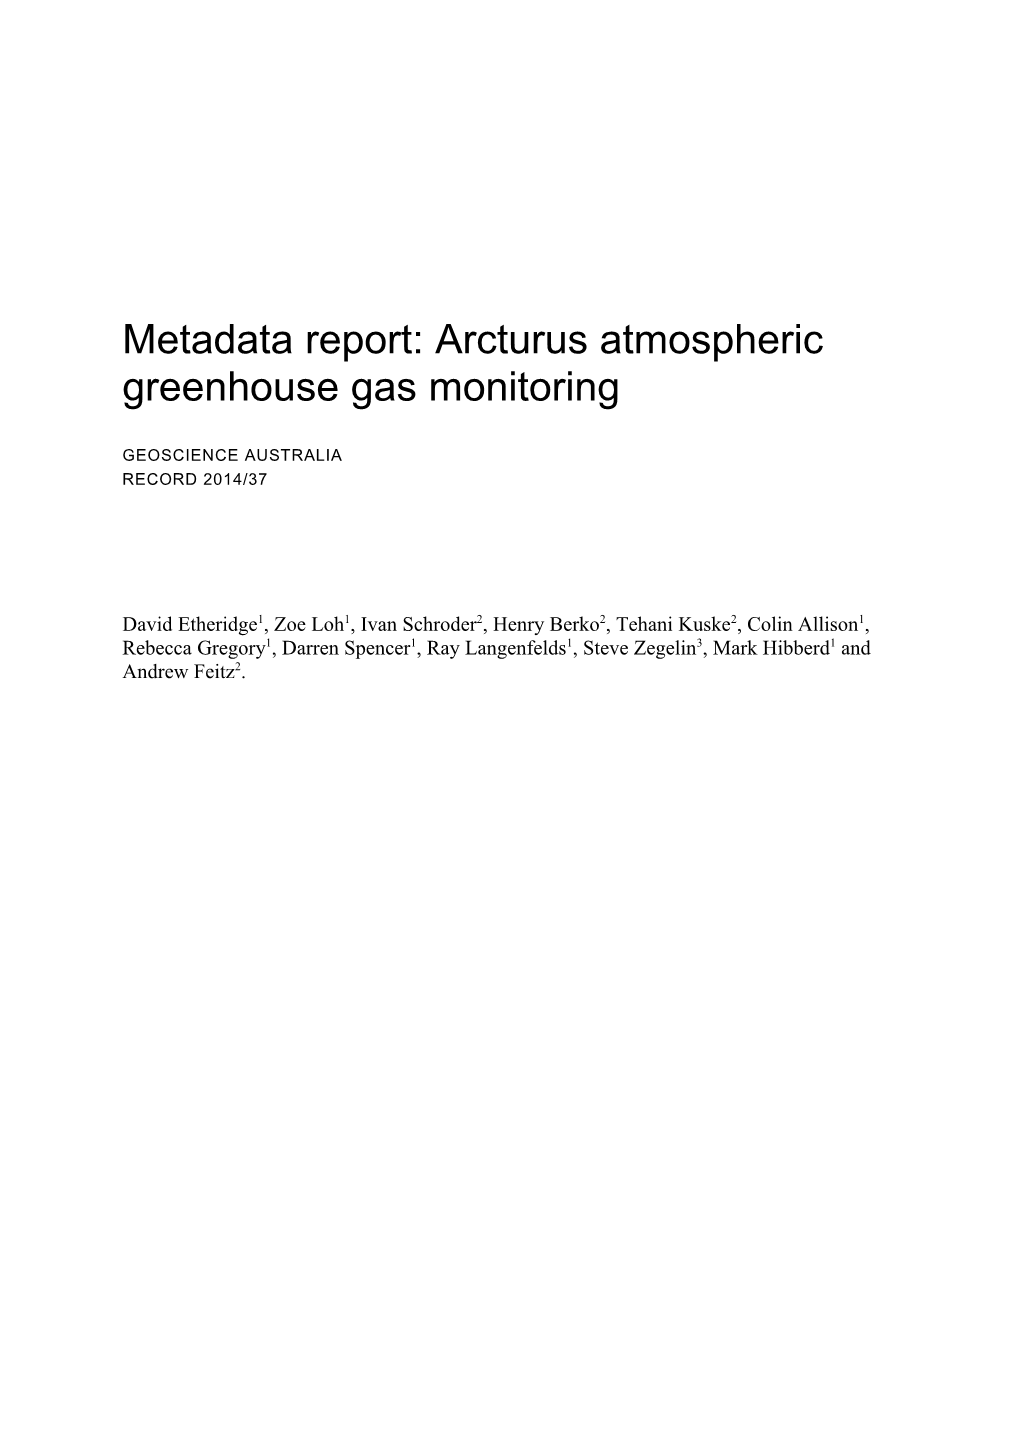 Metadata Report: Arcturus Atmospheric Greenhouse Gas Monitoring